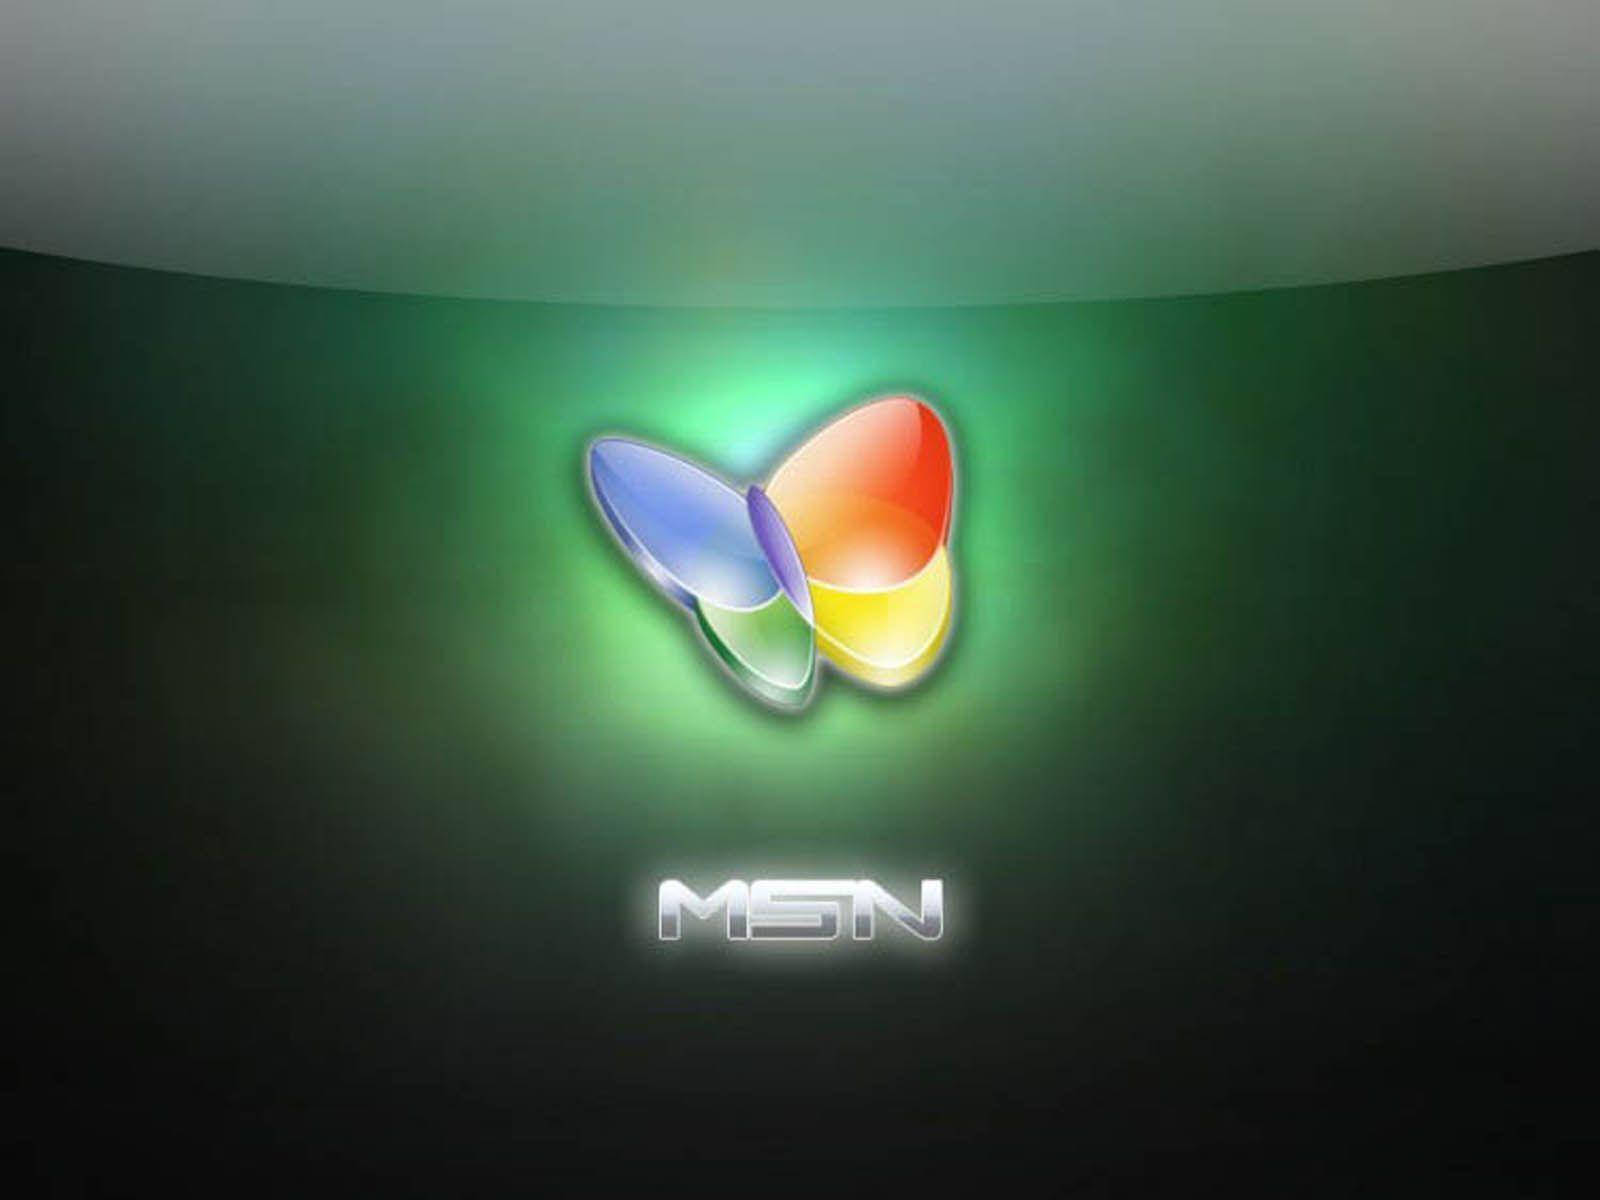 MSN Green Neon Lights Wallpaper